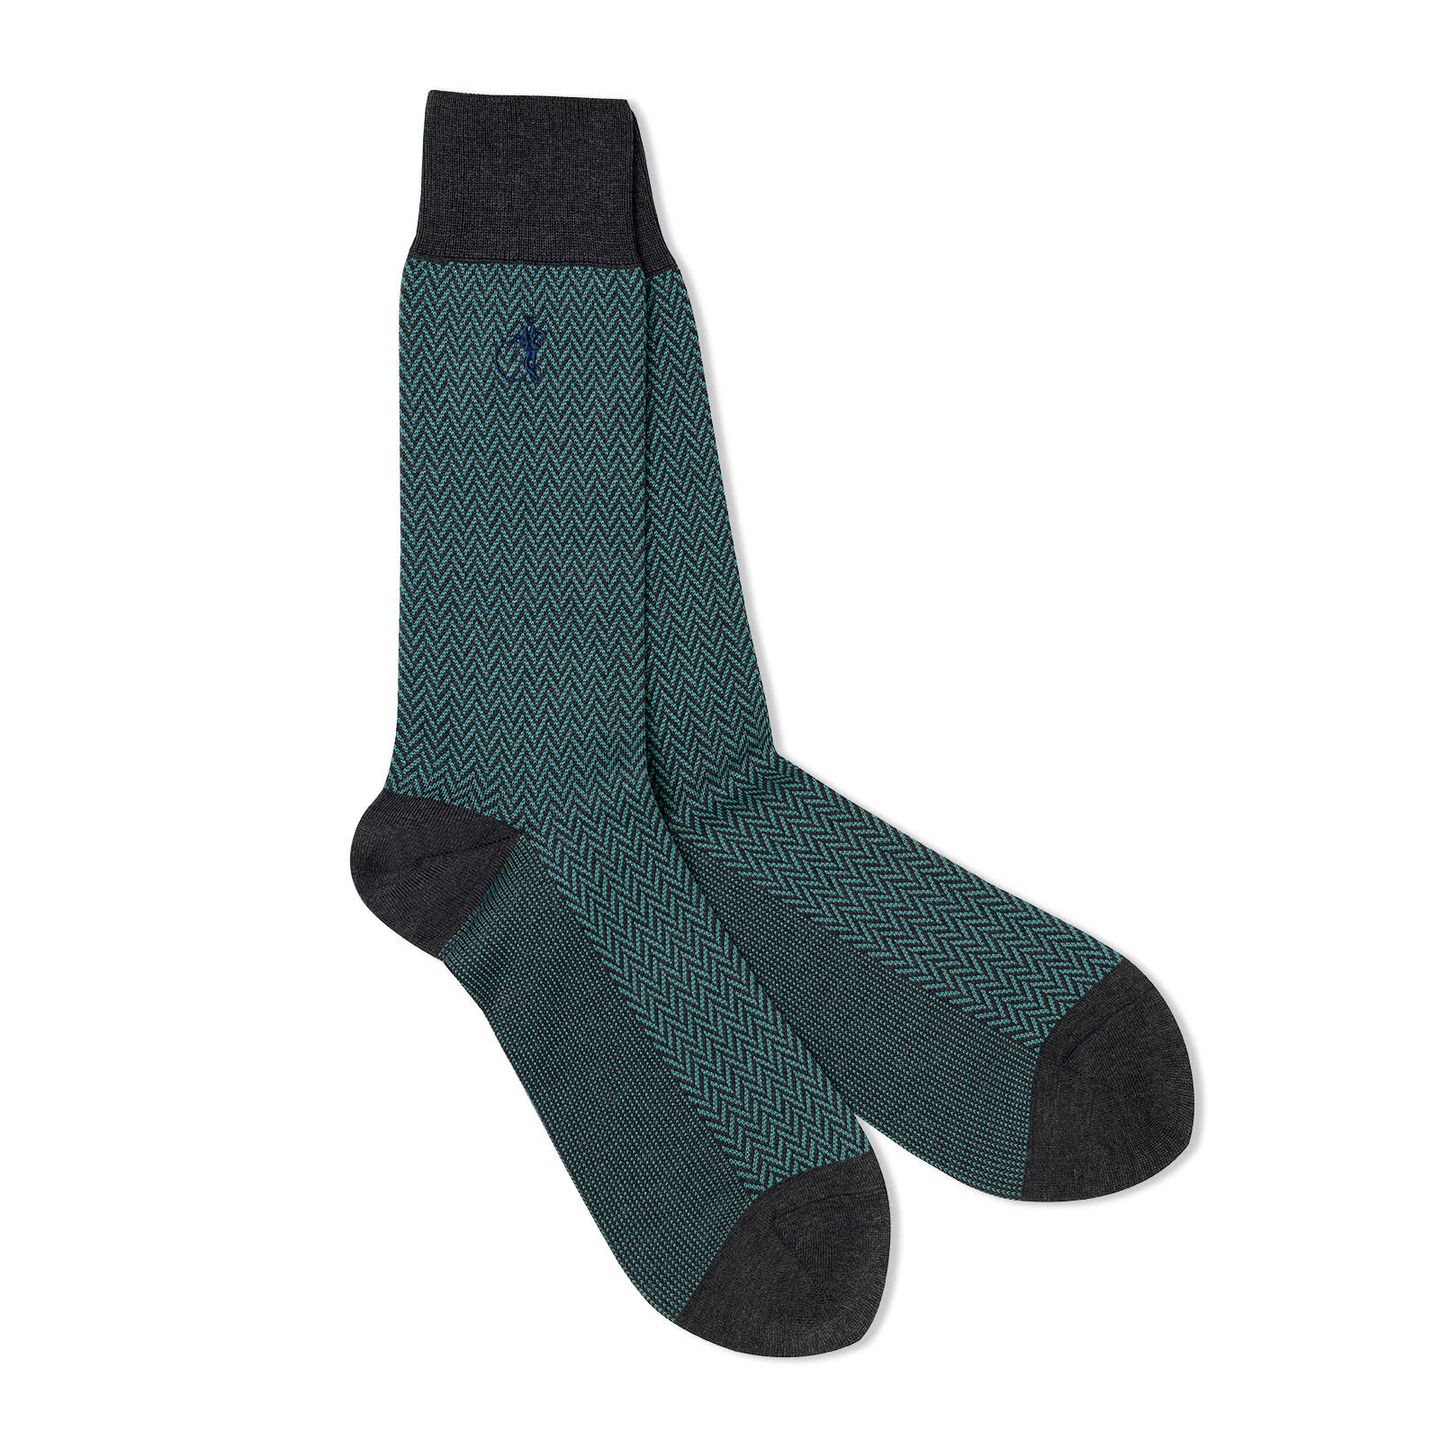 Herringbone green and black zig zag patterned socks